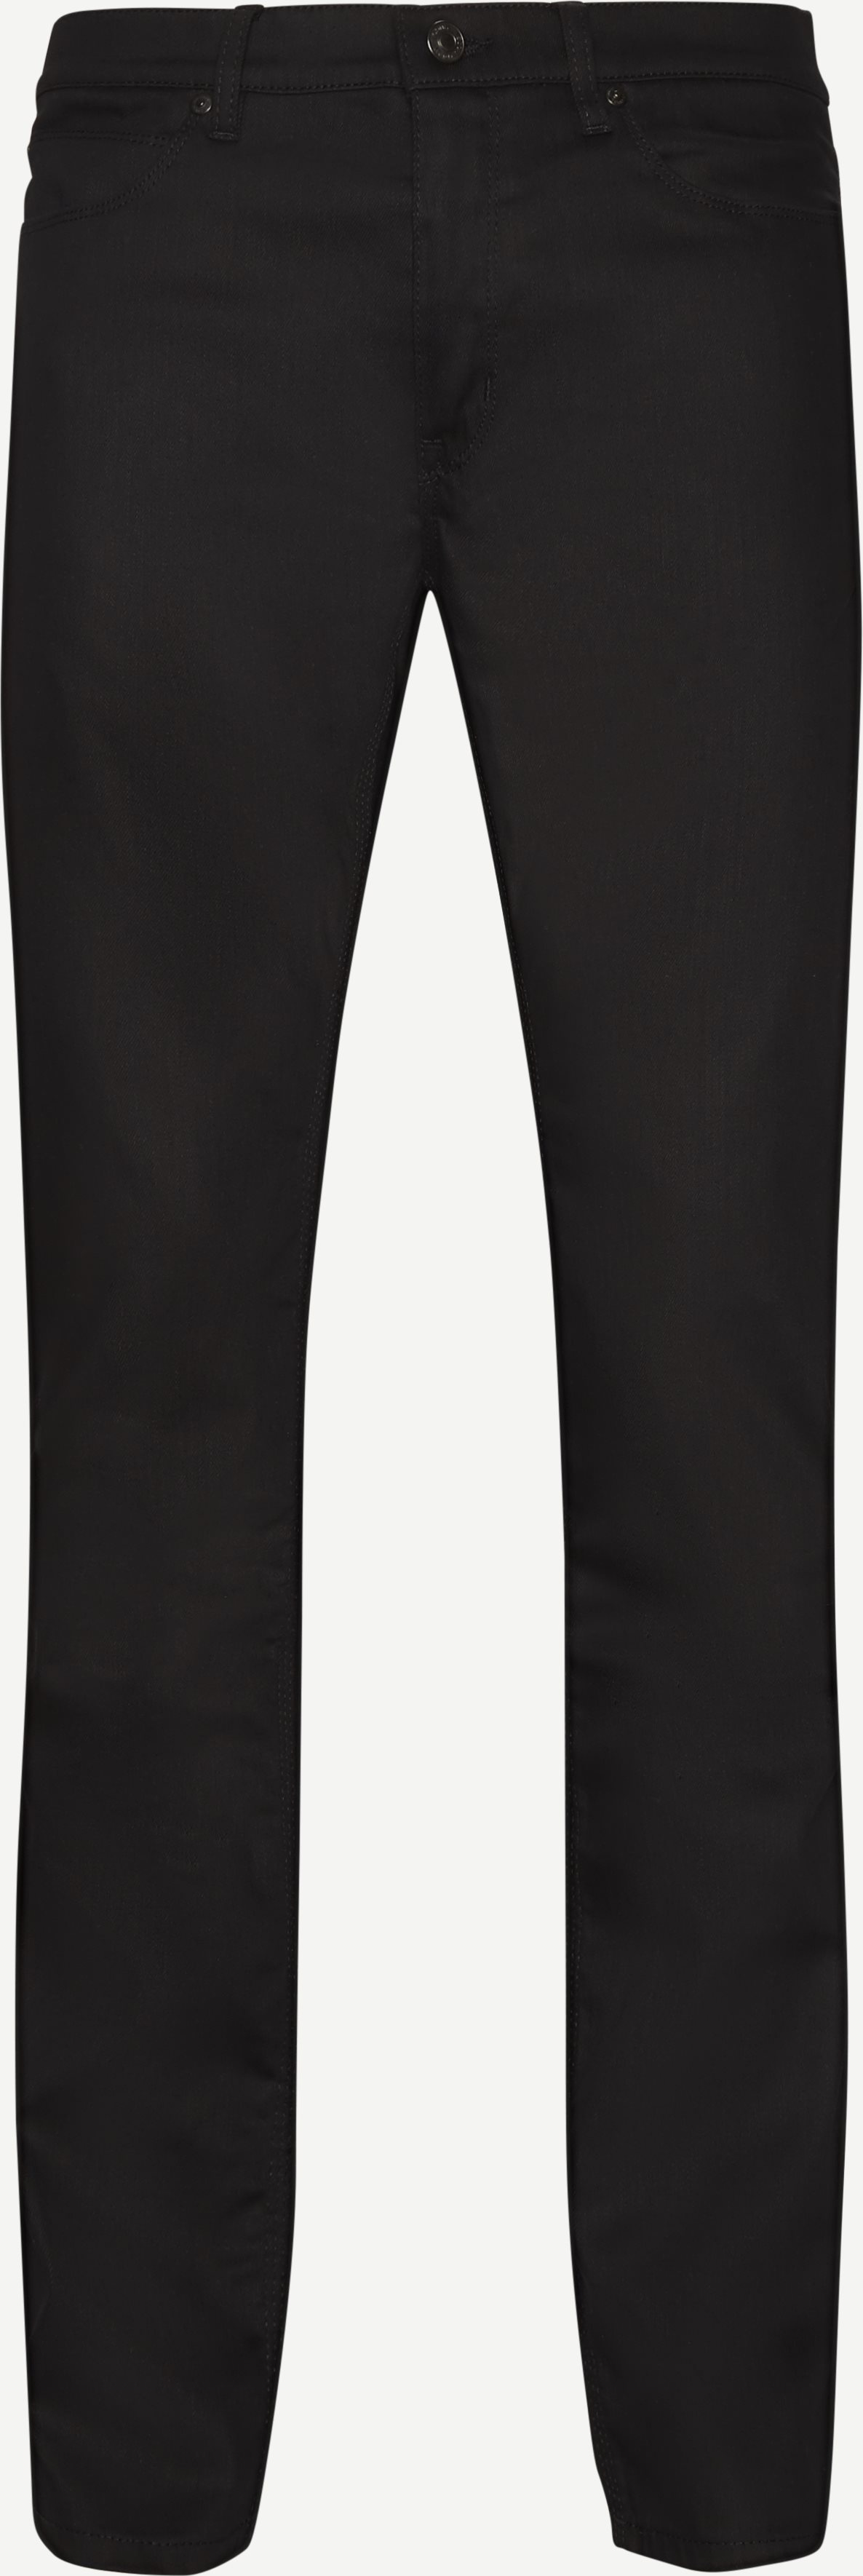 Hugo708 Jeans - Jeans - Slim fit - Black